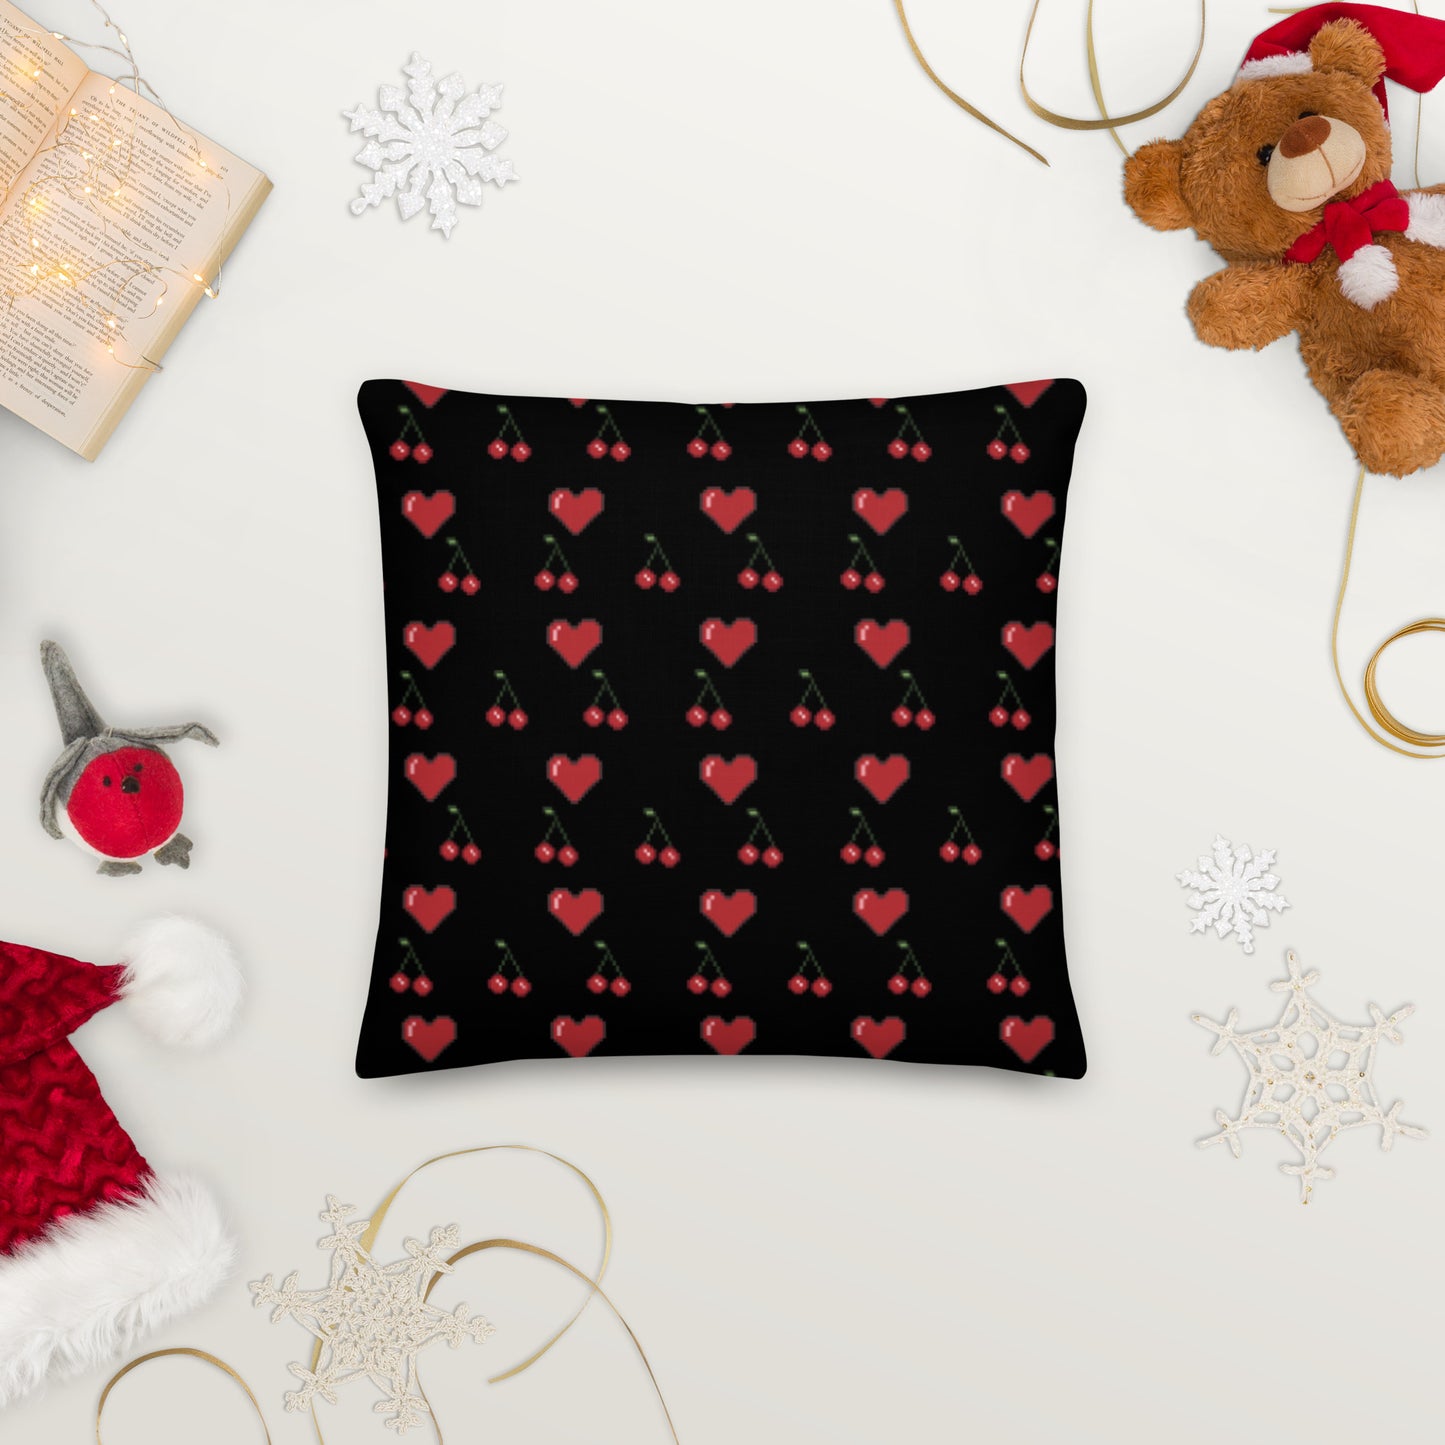 Premium Throw Pillow: Hearts & Cherries (red on black)